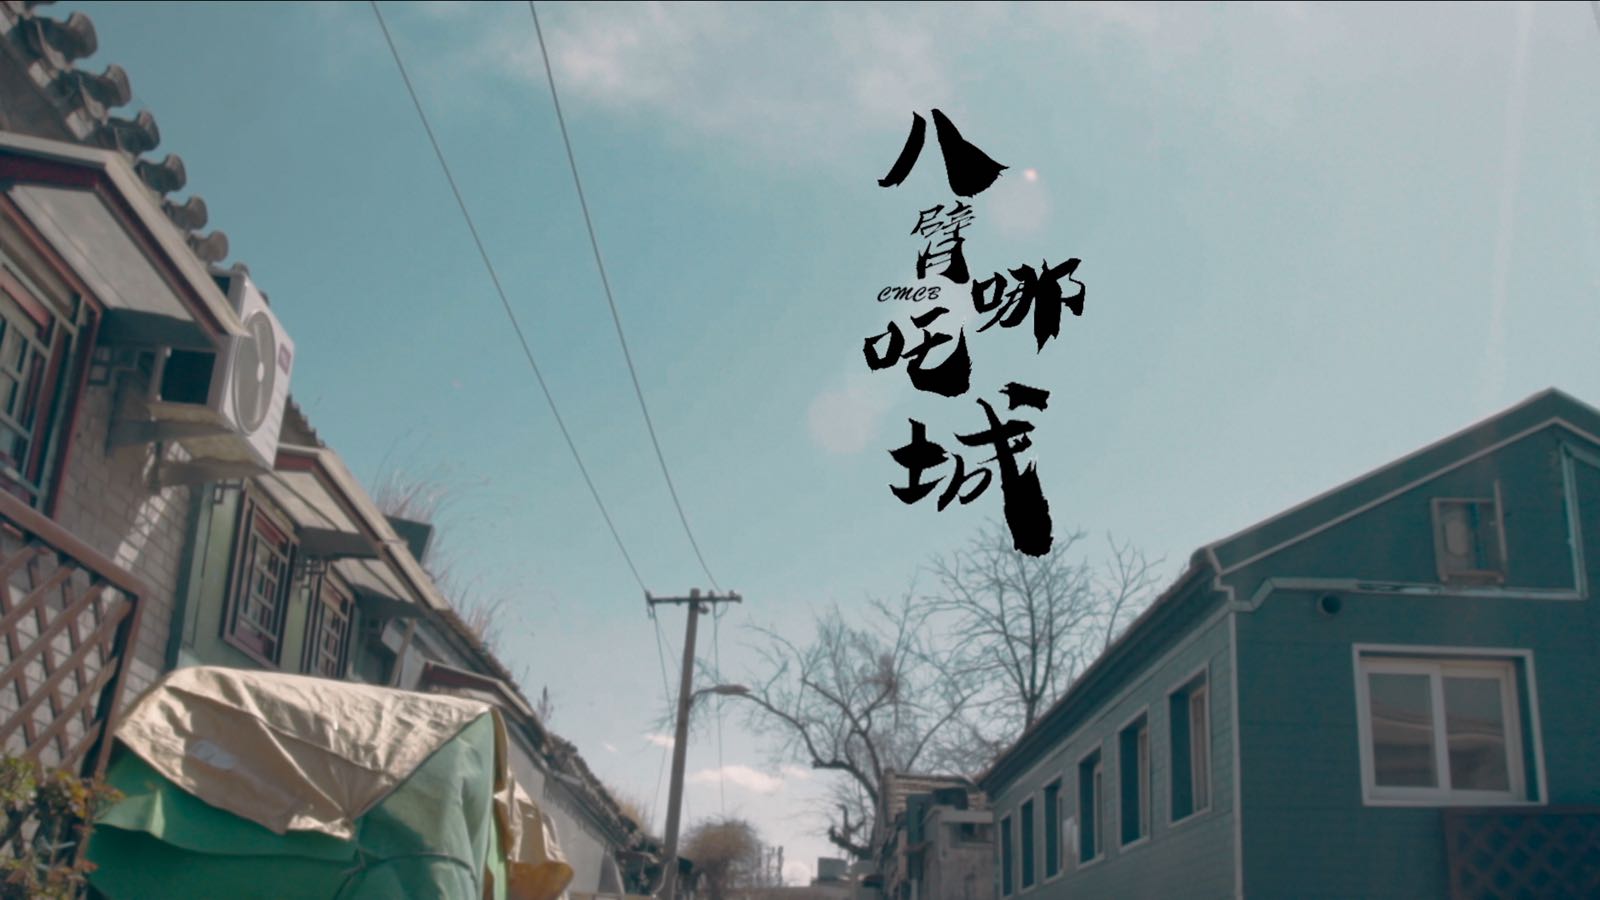 CMCB《八臂哪吒城》MV首发  用音乐影像揭穿事物表现